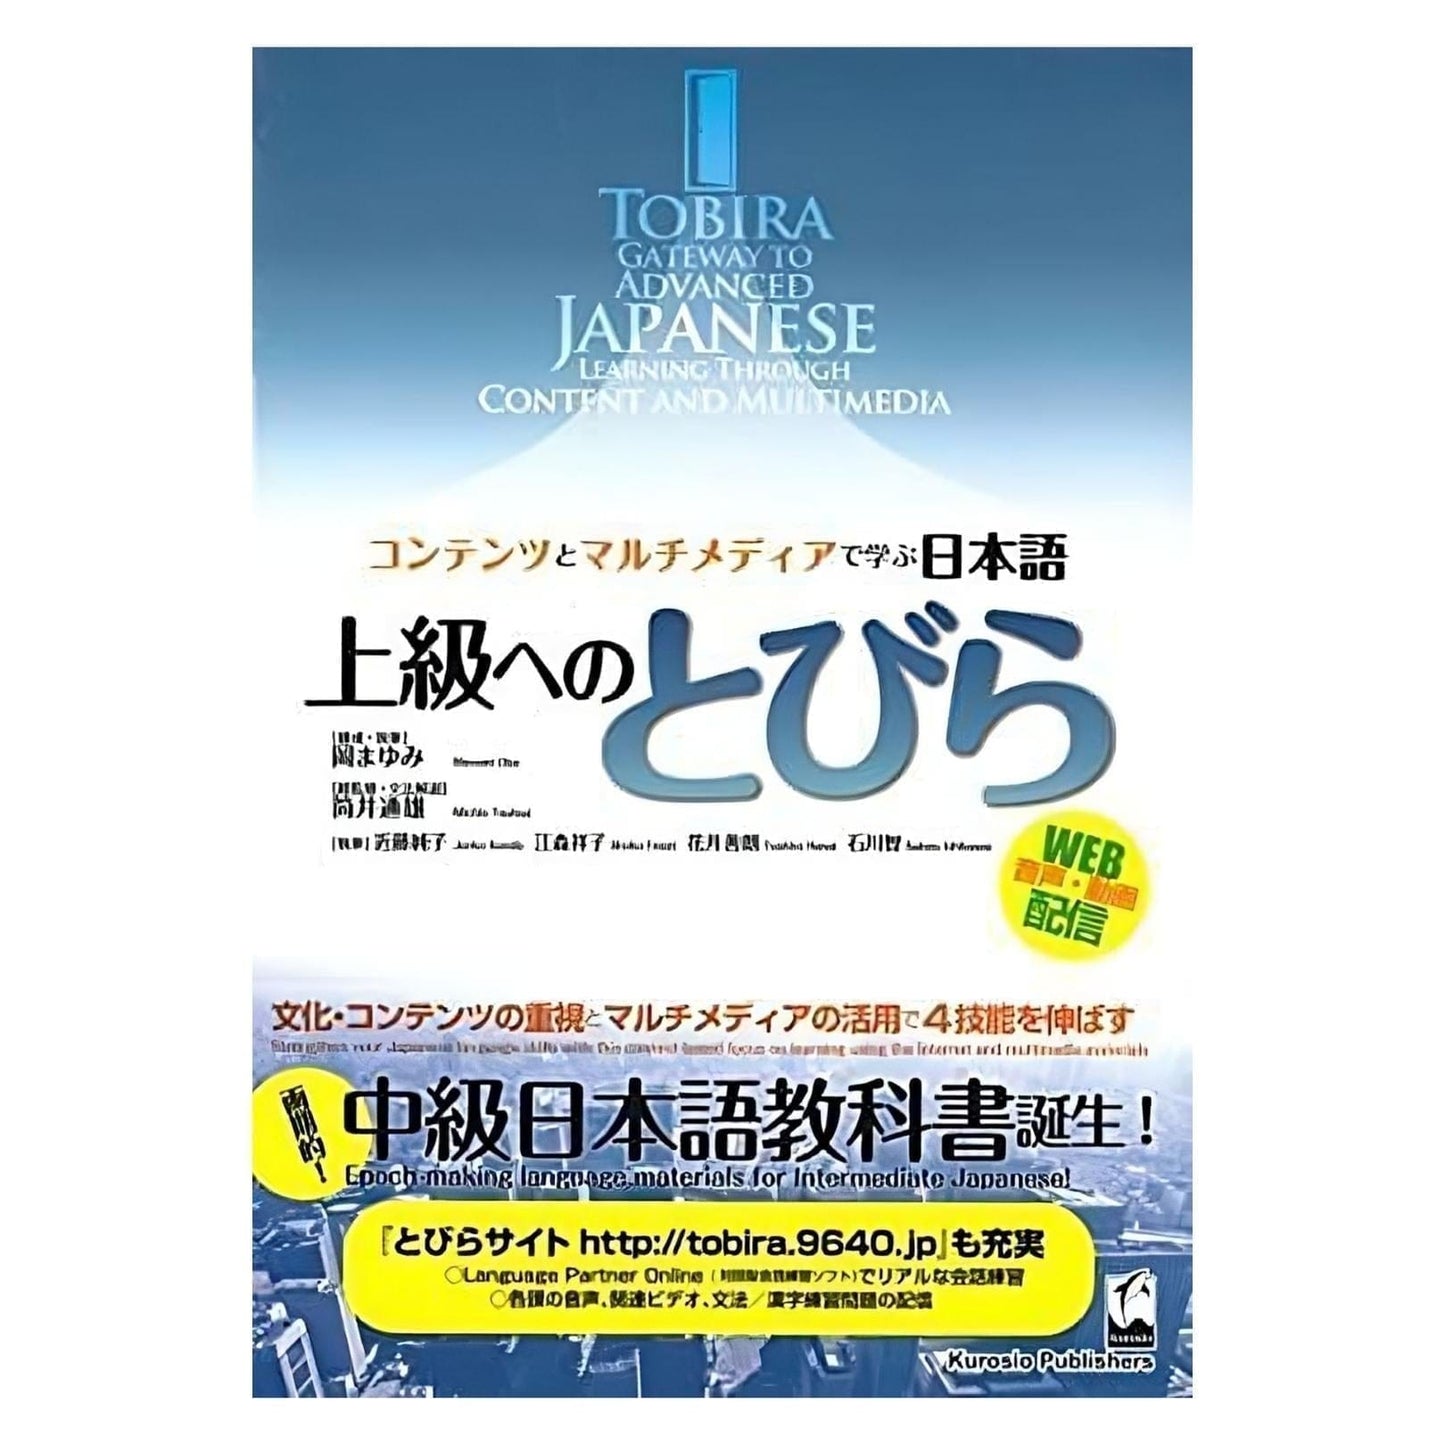 Japanese Handbook | Tobira Gateway to Advanced Japanese ChitoroShop